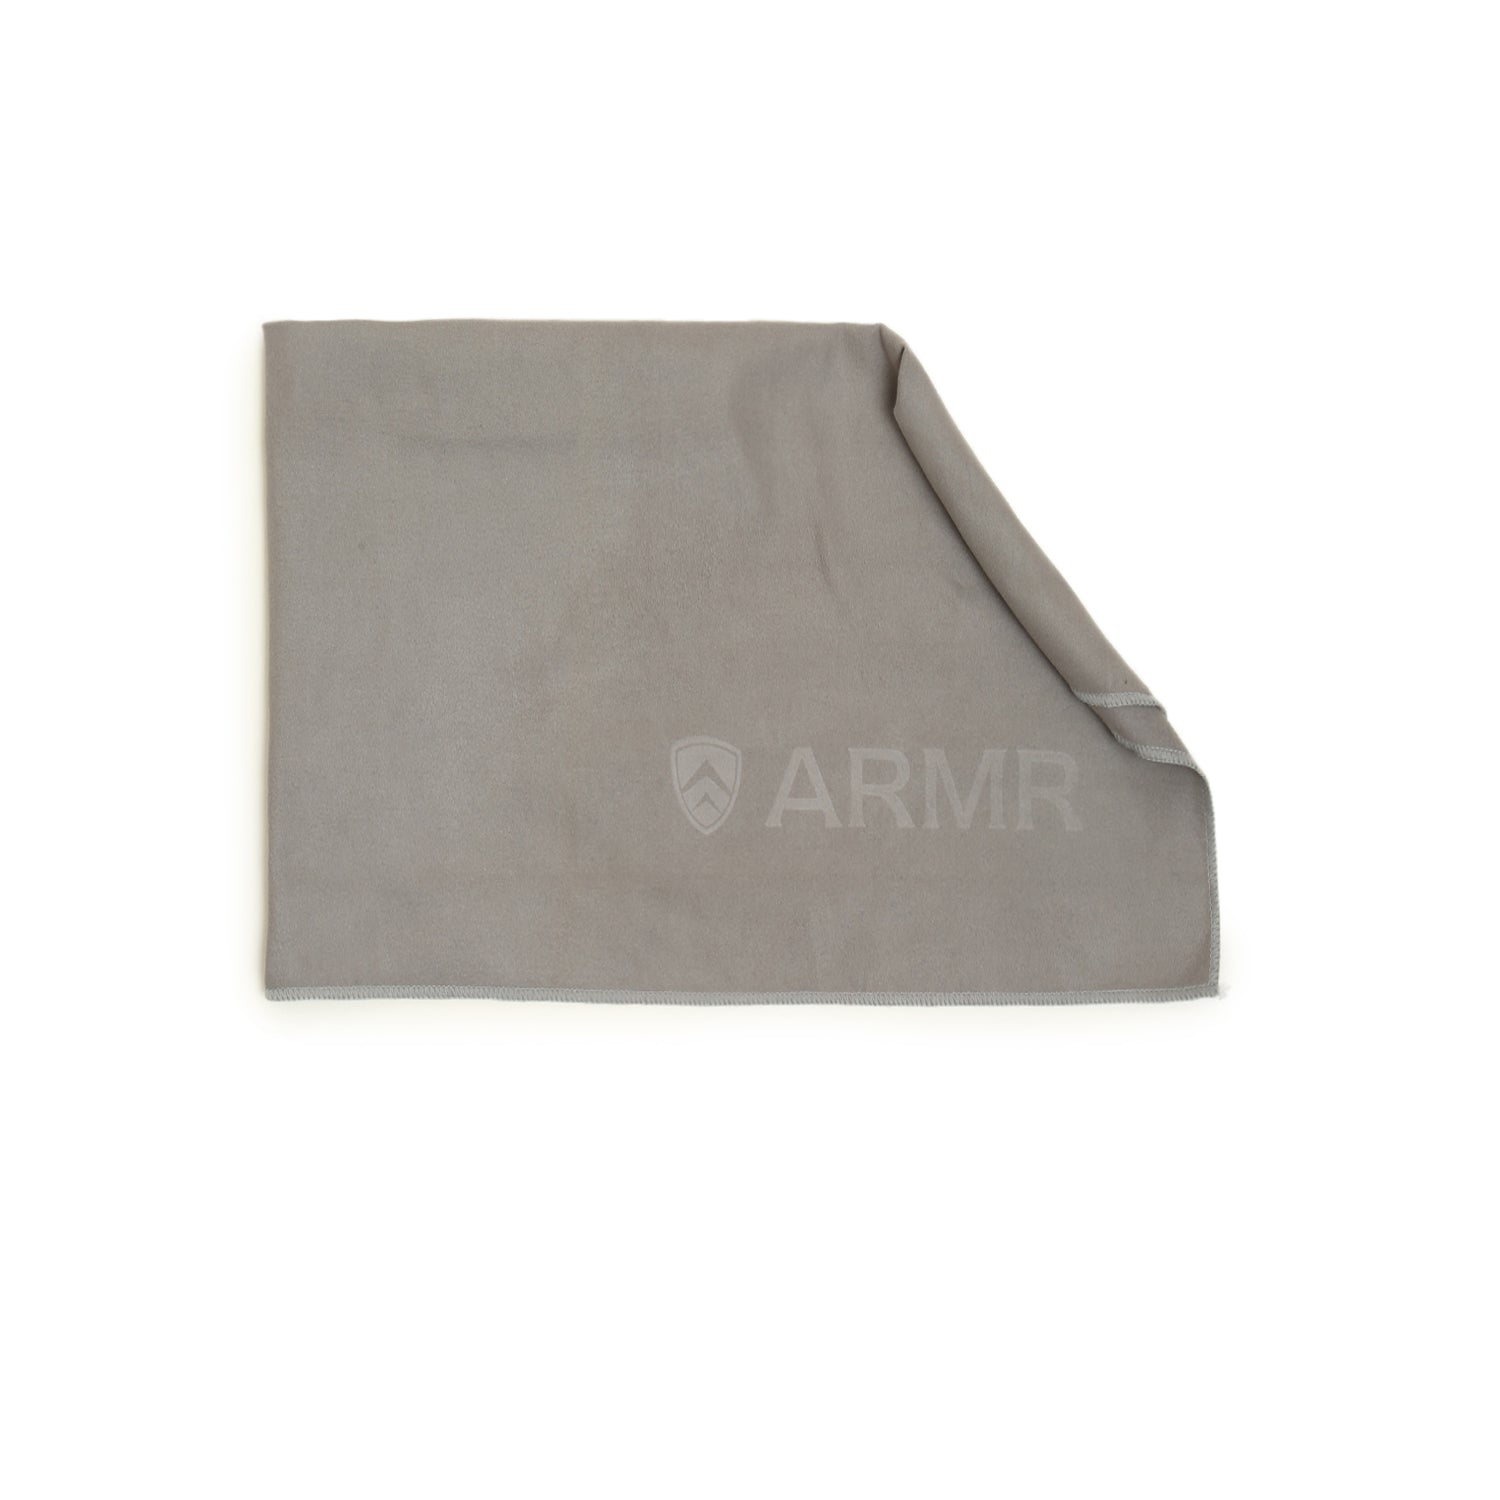 ARMR Unisex GREY SPORT Quickdry TOWEL